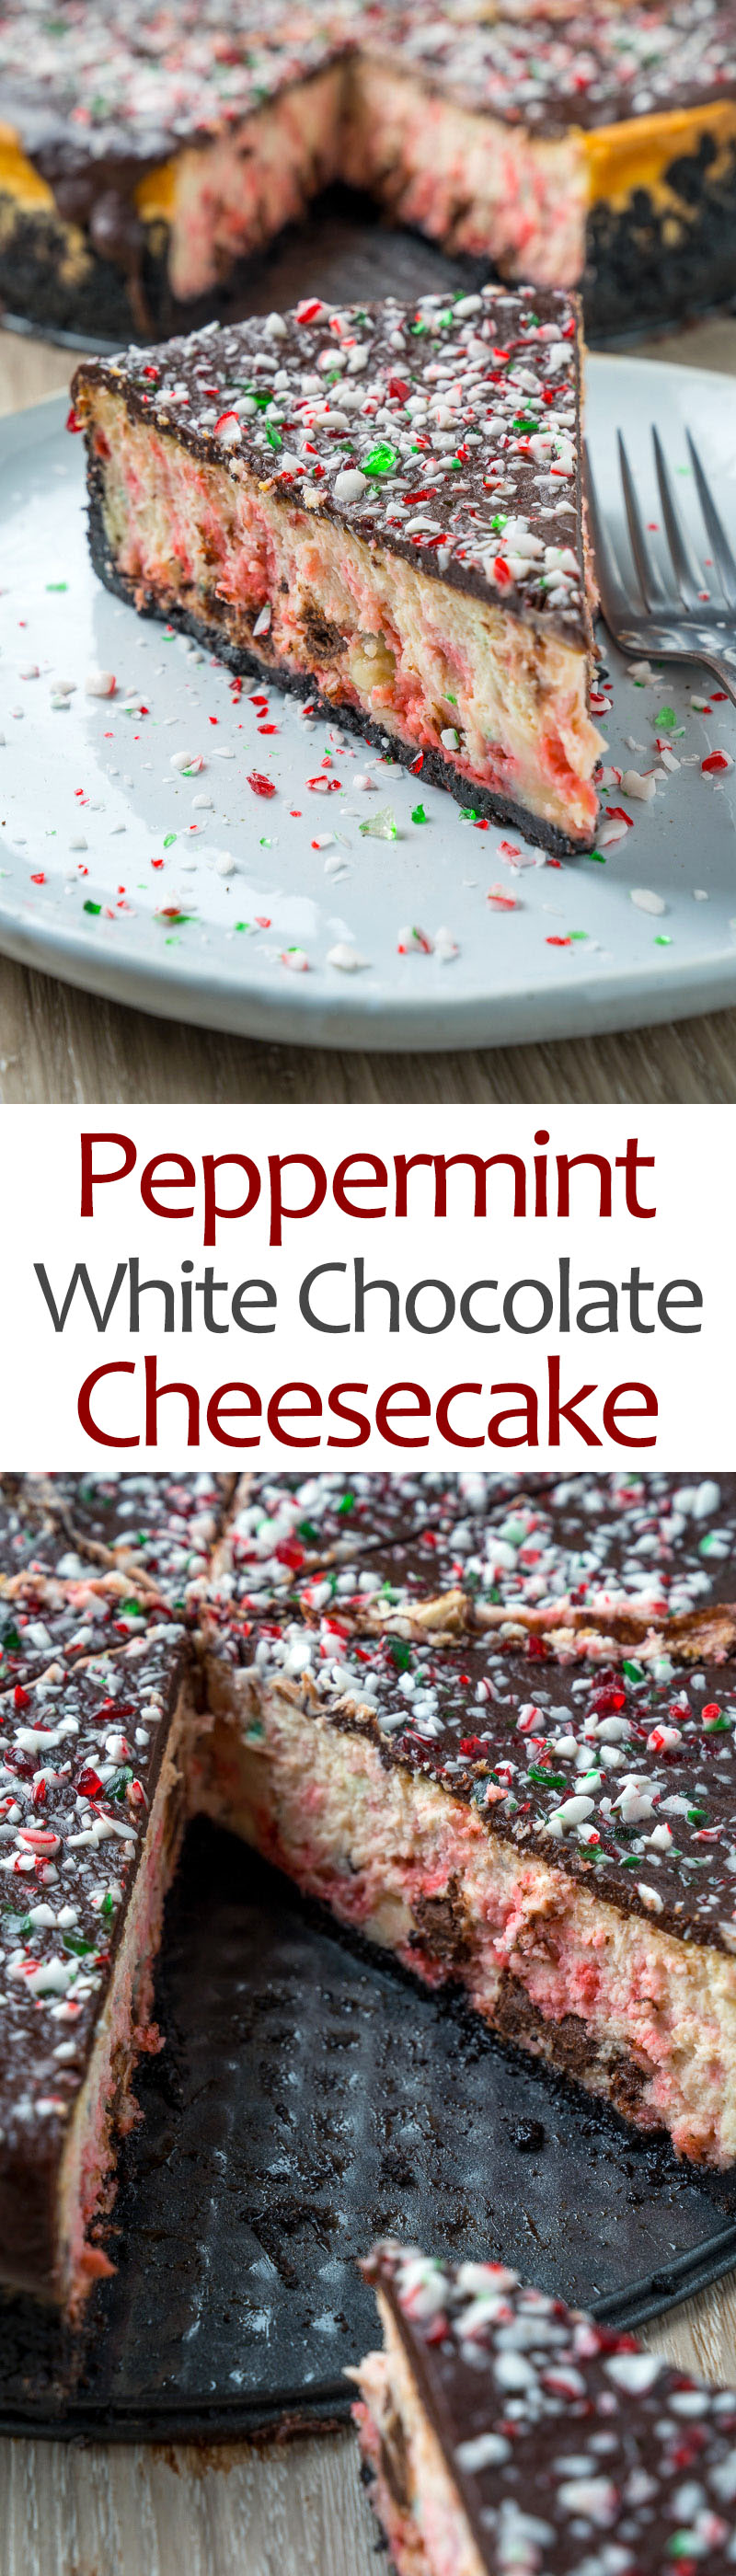 Peppermint Chocolate Cheesecake